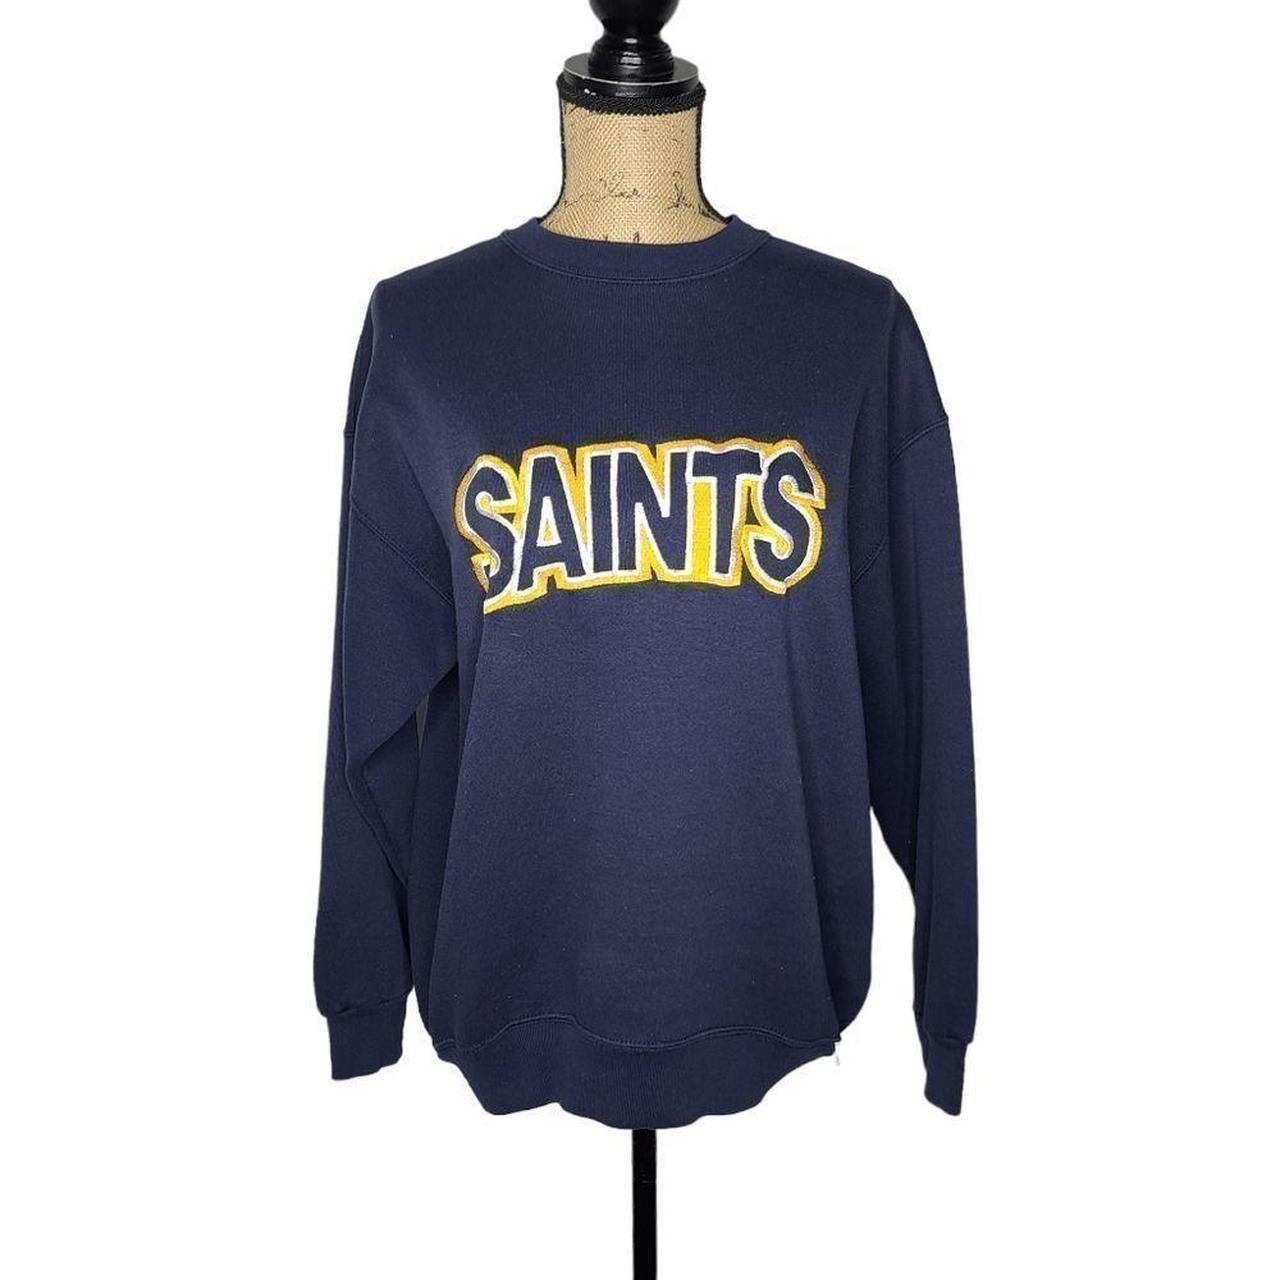 Pre-owned vintage Saints Crewneck Sweatshirt , tag